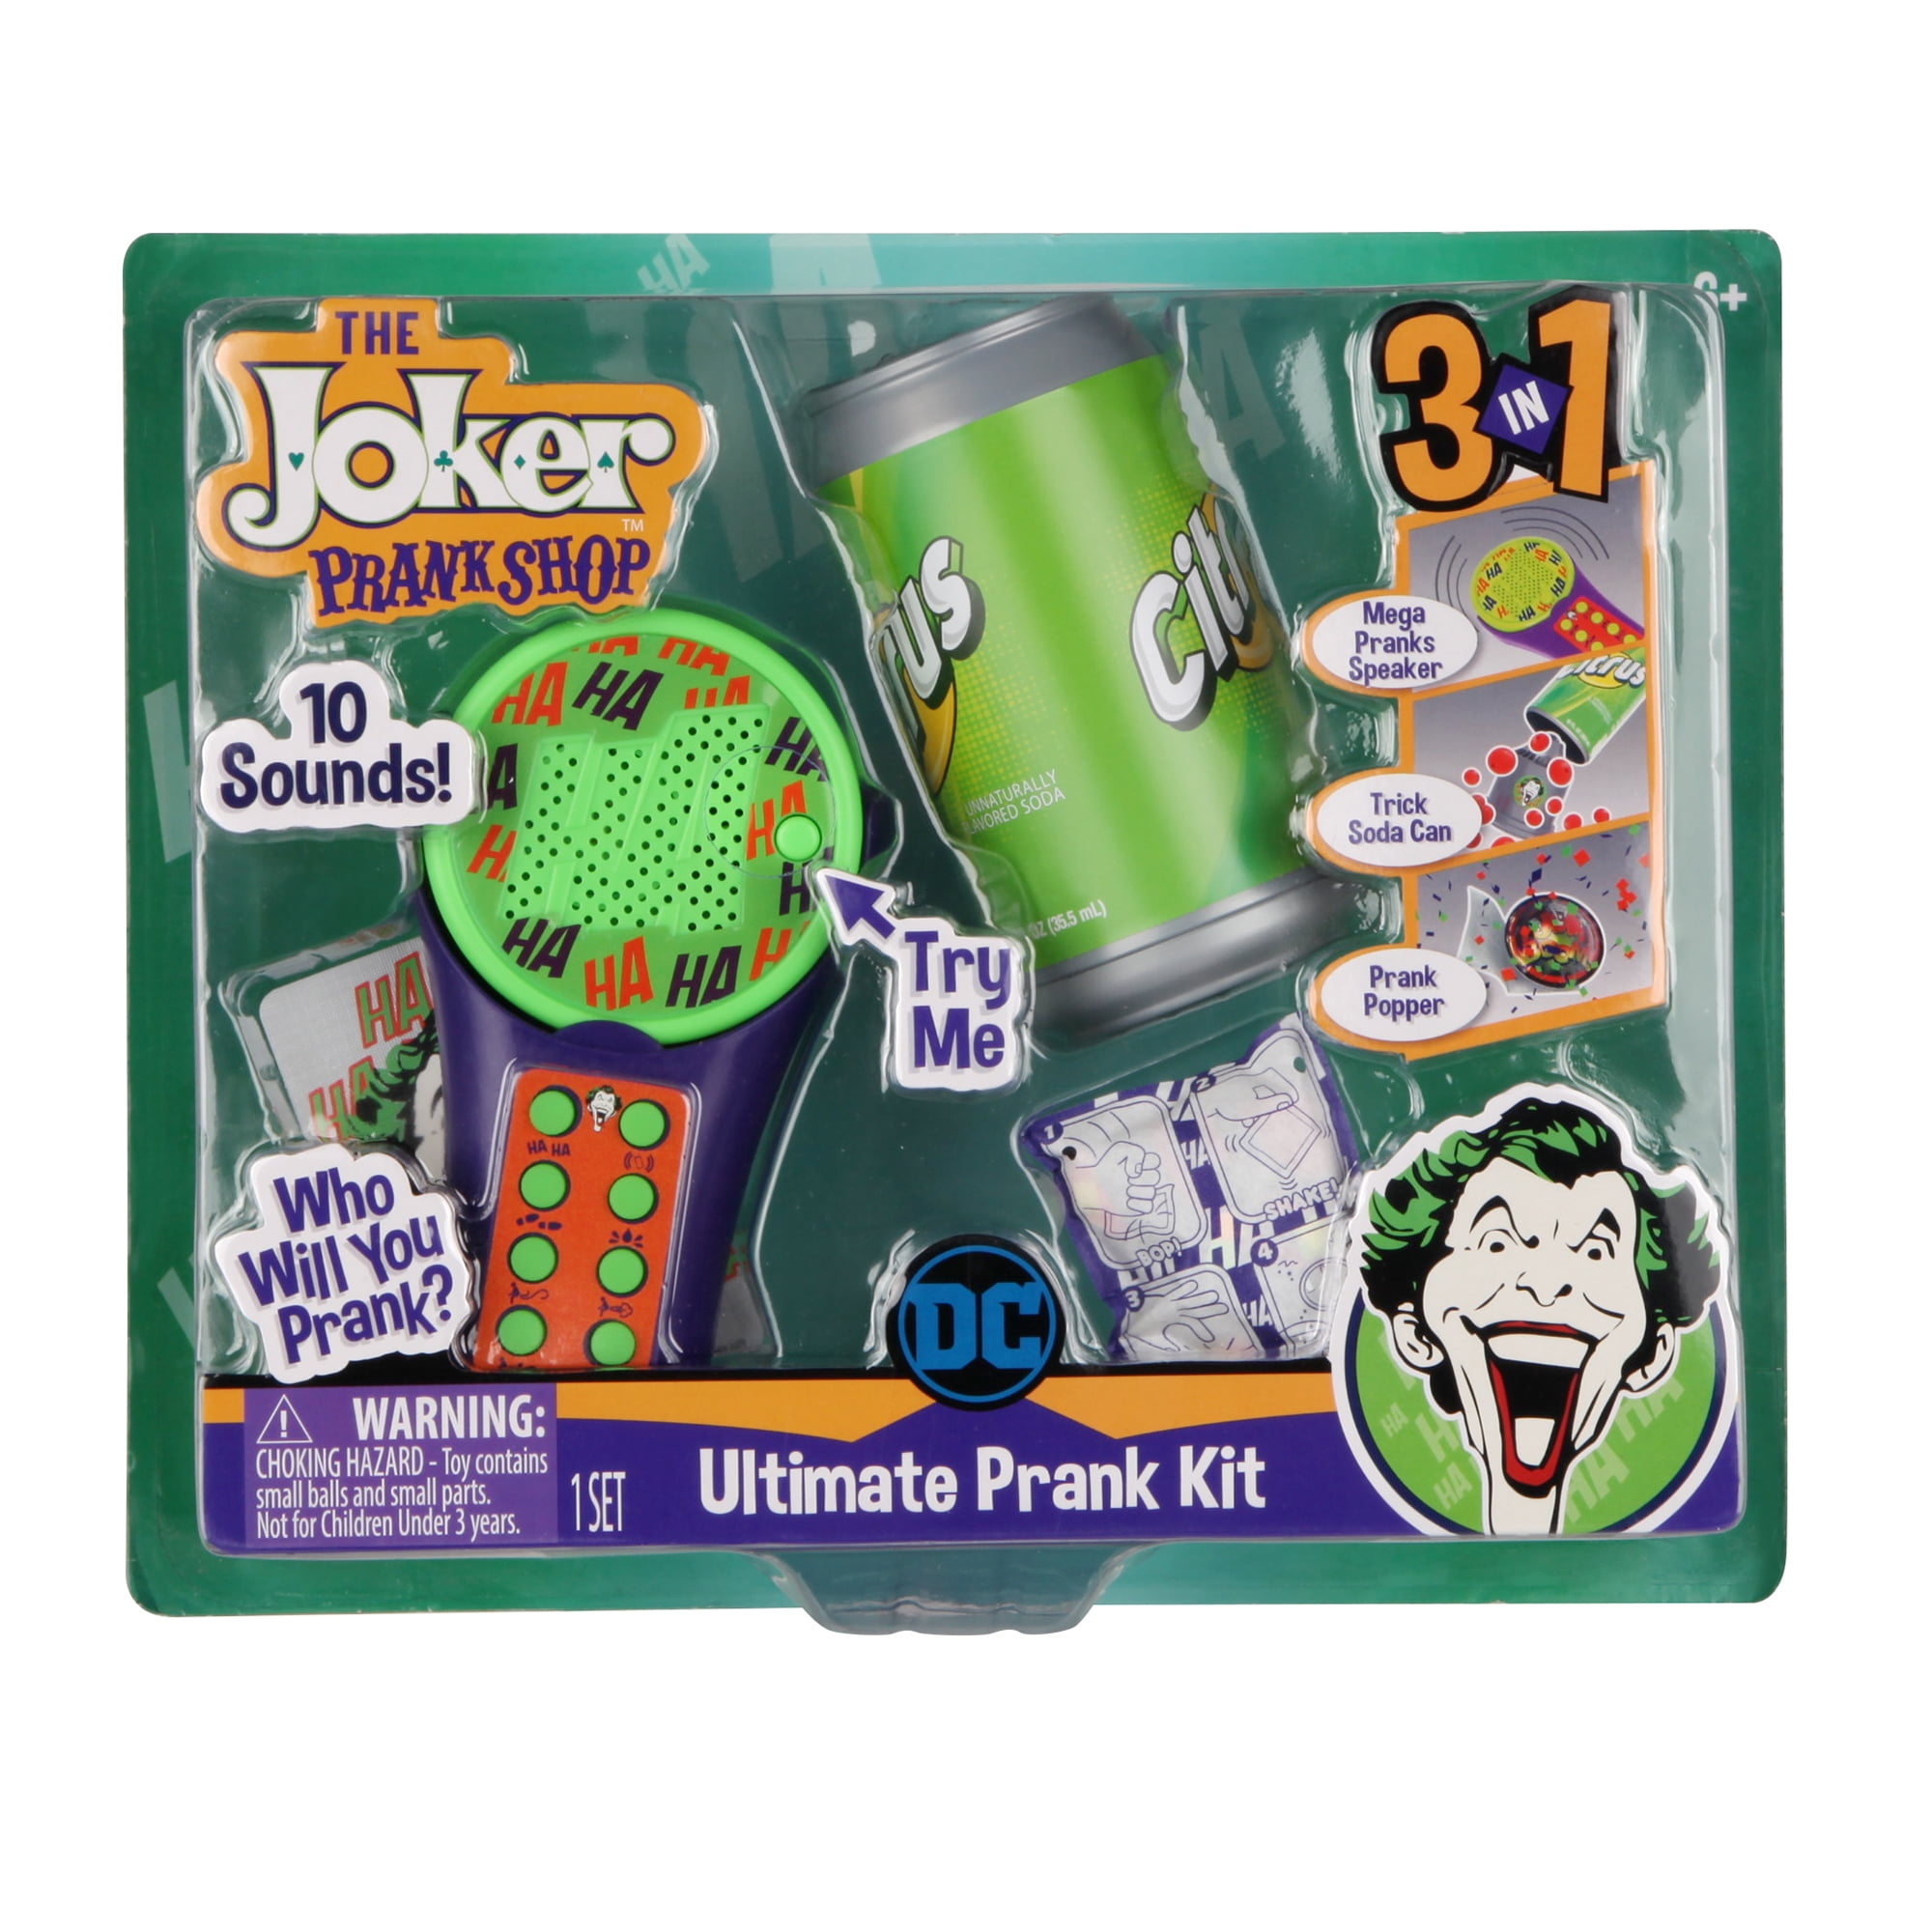 Prank Sweets Candies Practical Joke Novelty Trick Gag Joker 